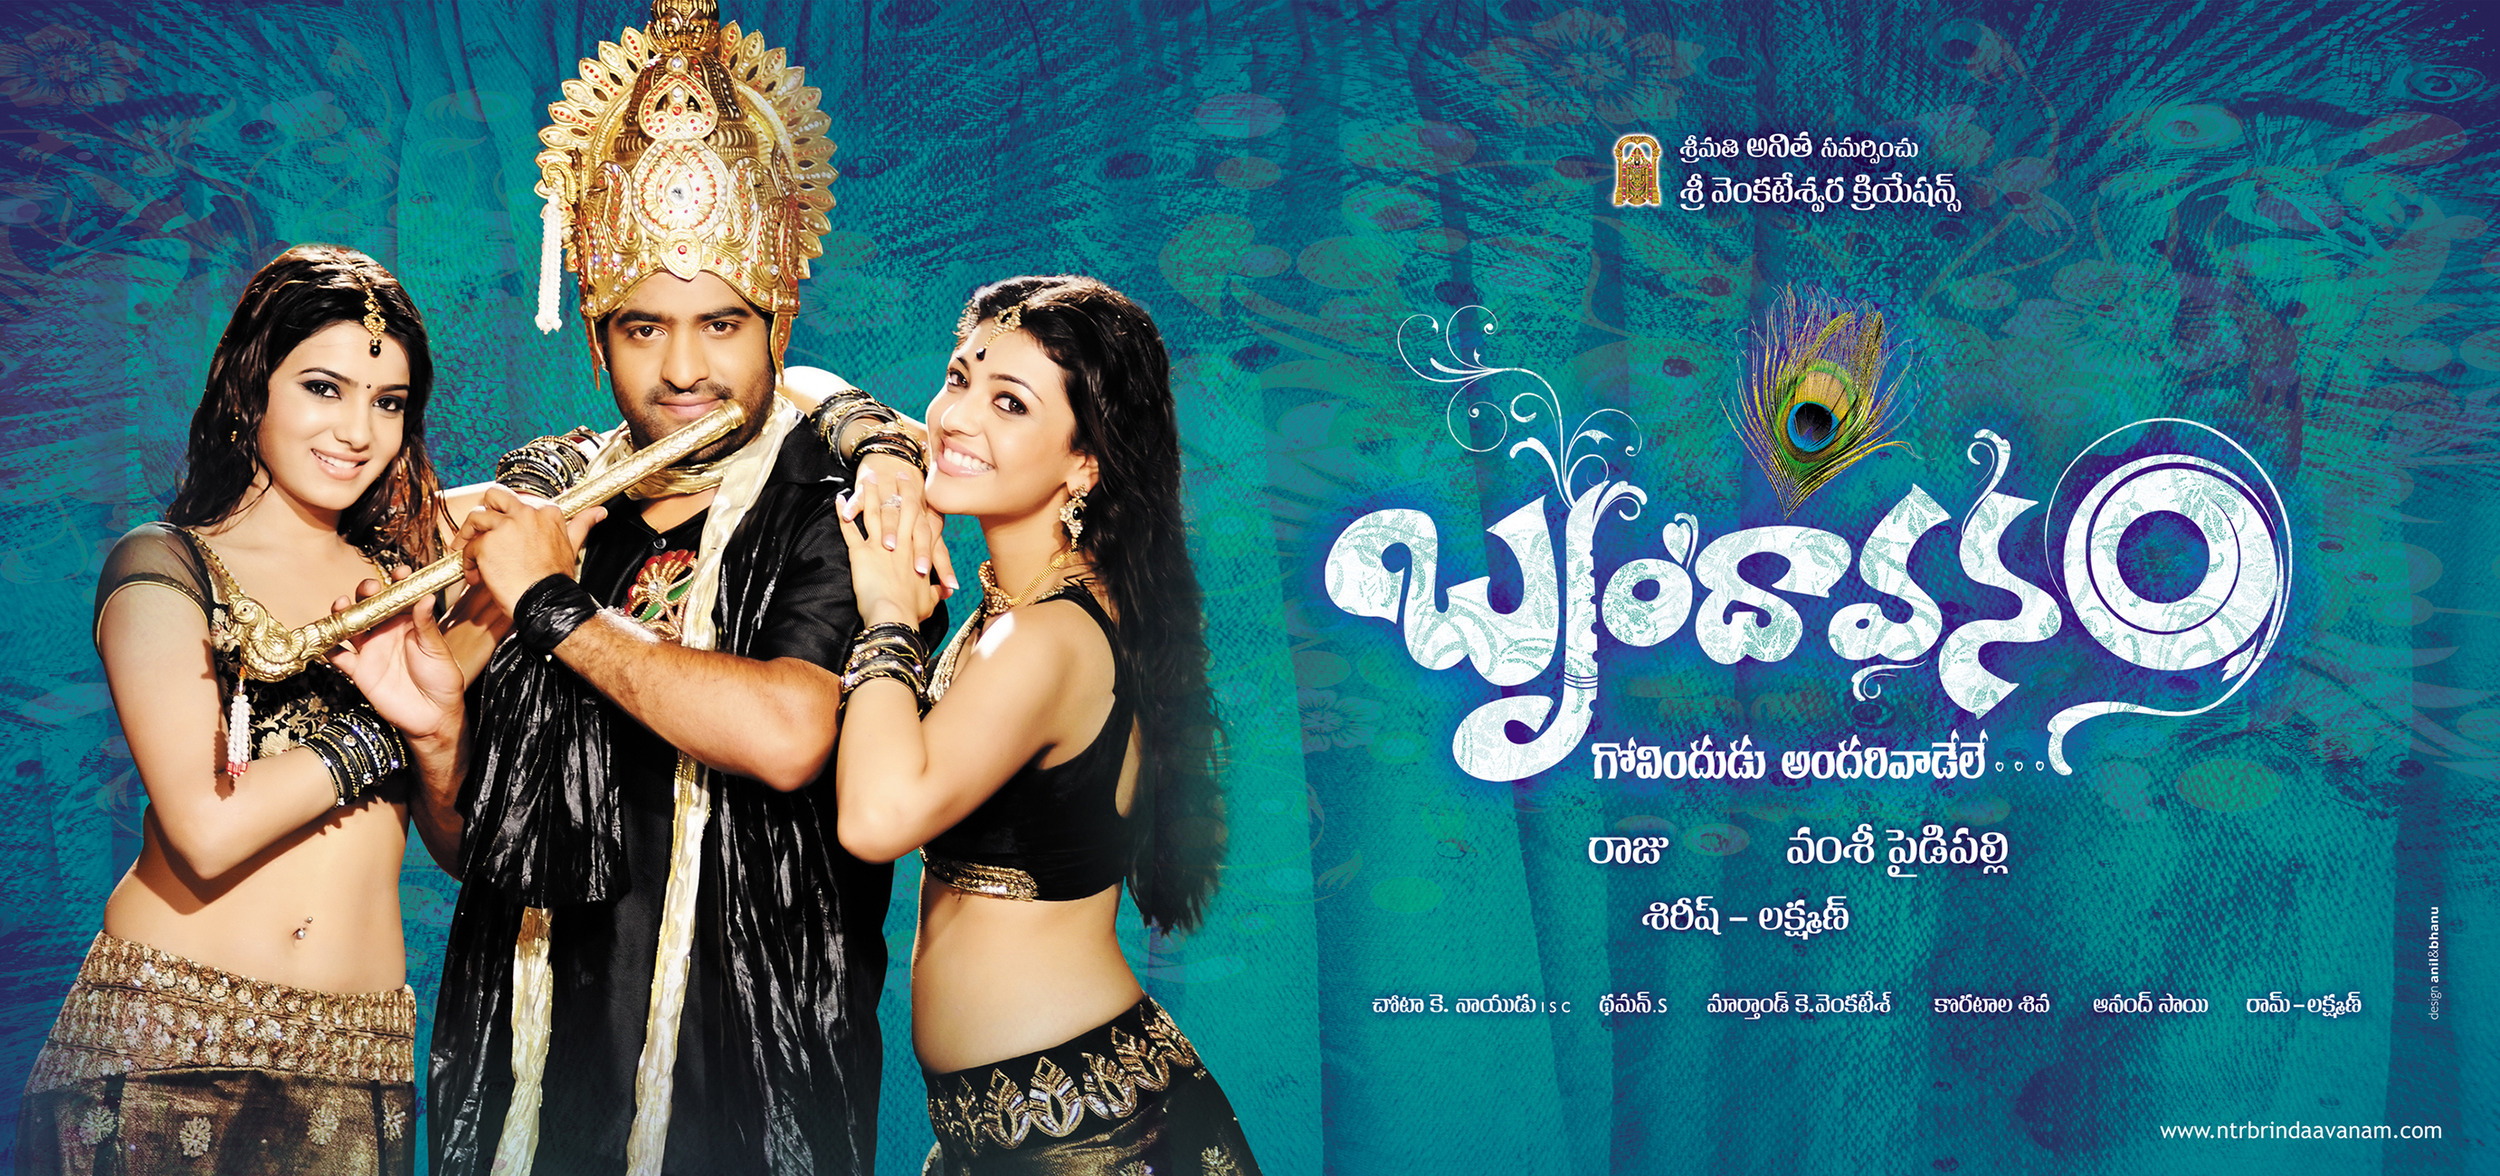 Mega Sized Movie Poster Image for Brindaavanam (#5 of 14)